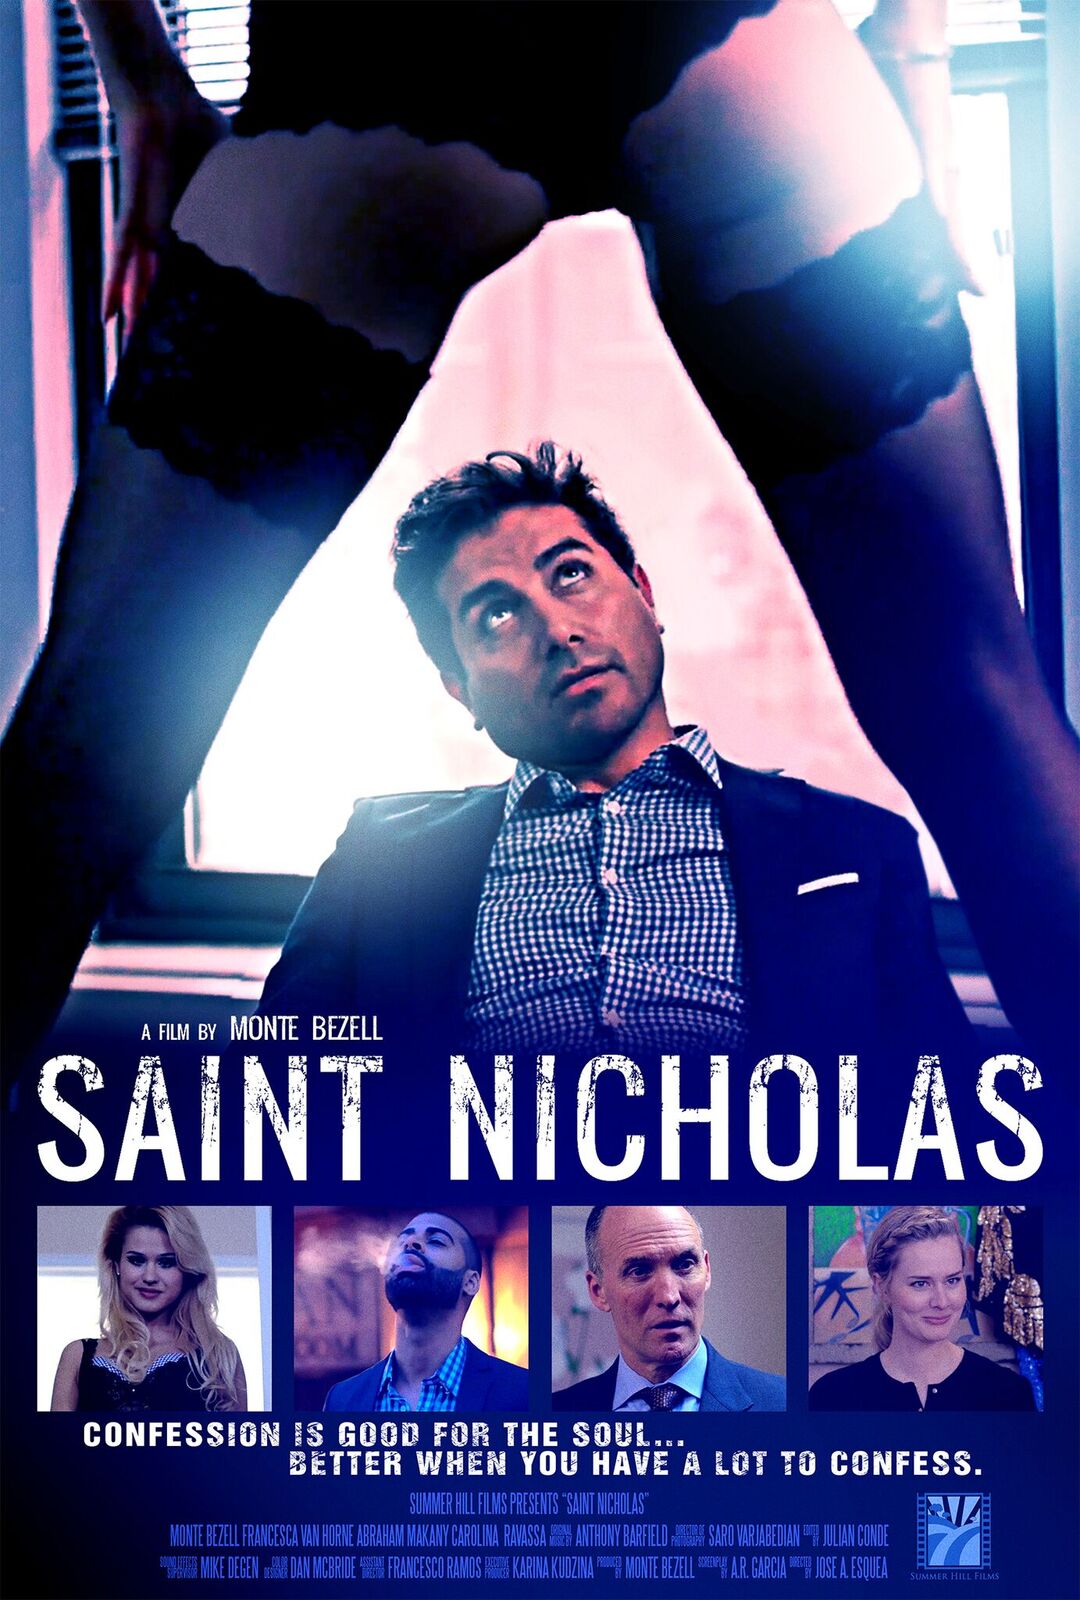 Nonton film Saint Nicholas layarkaca21 indoxx1 ganool online streaming terbaru